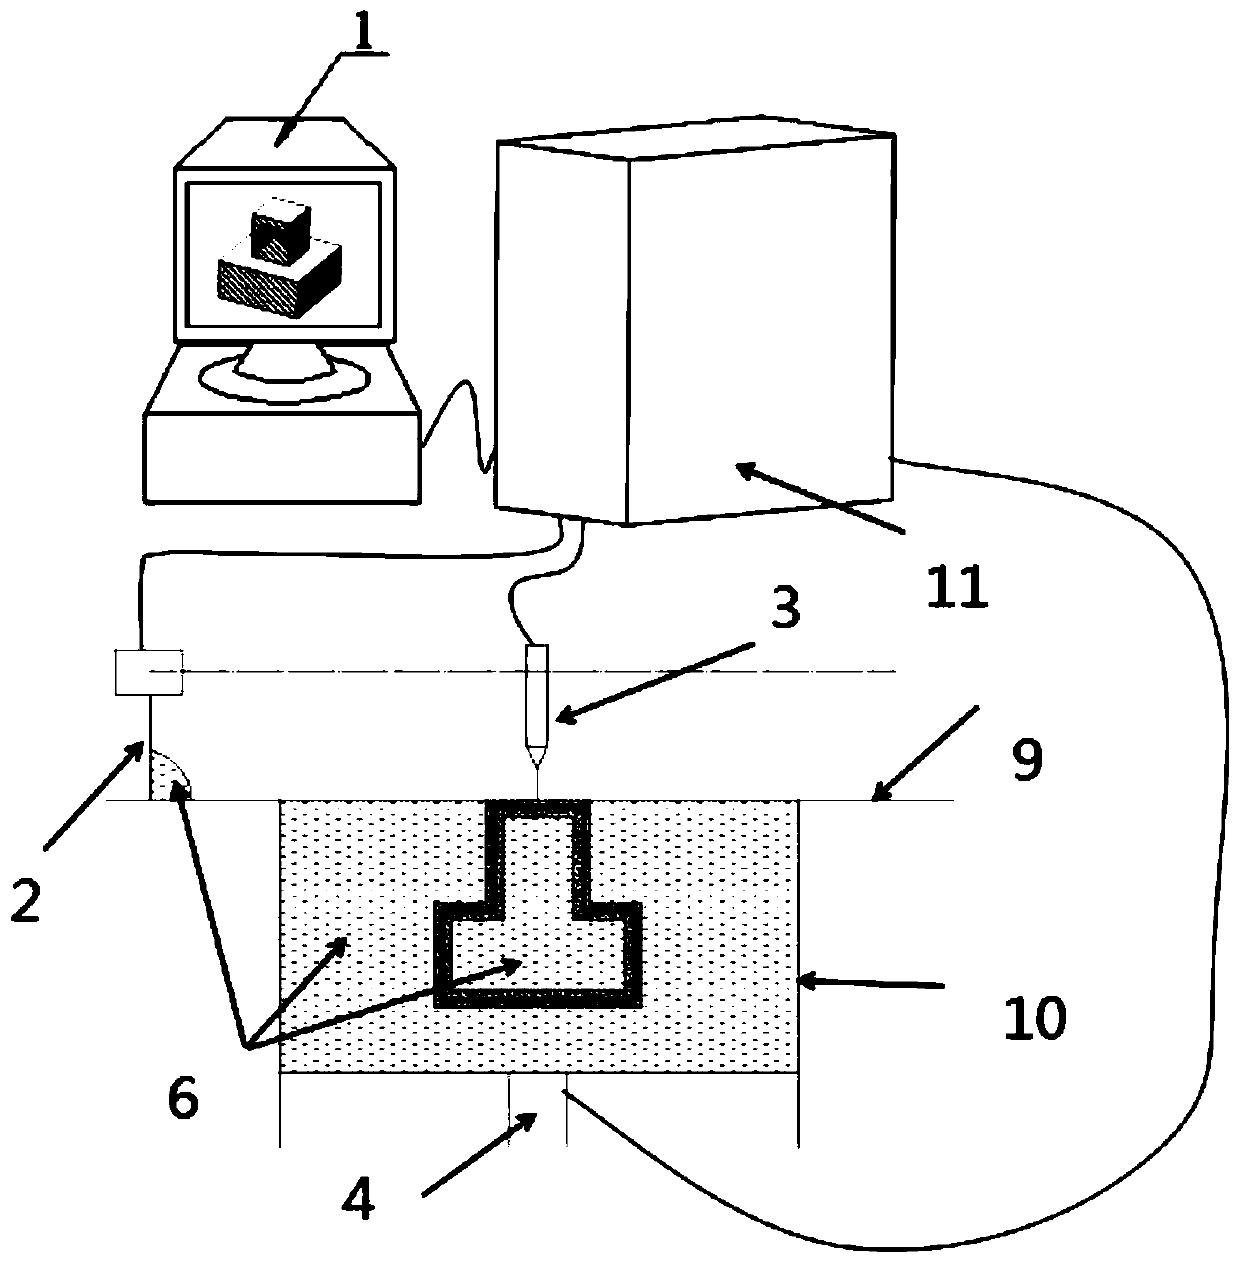 A 3D printing method of laser composite contour scanning